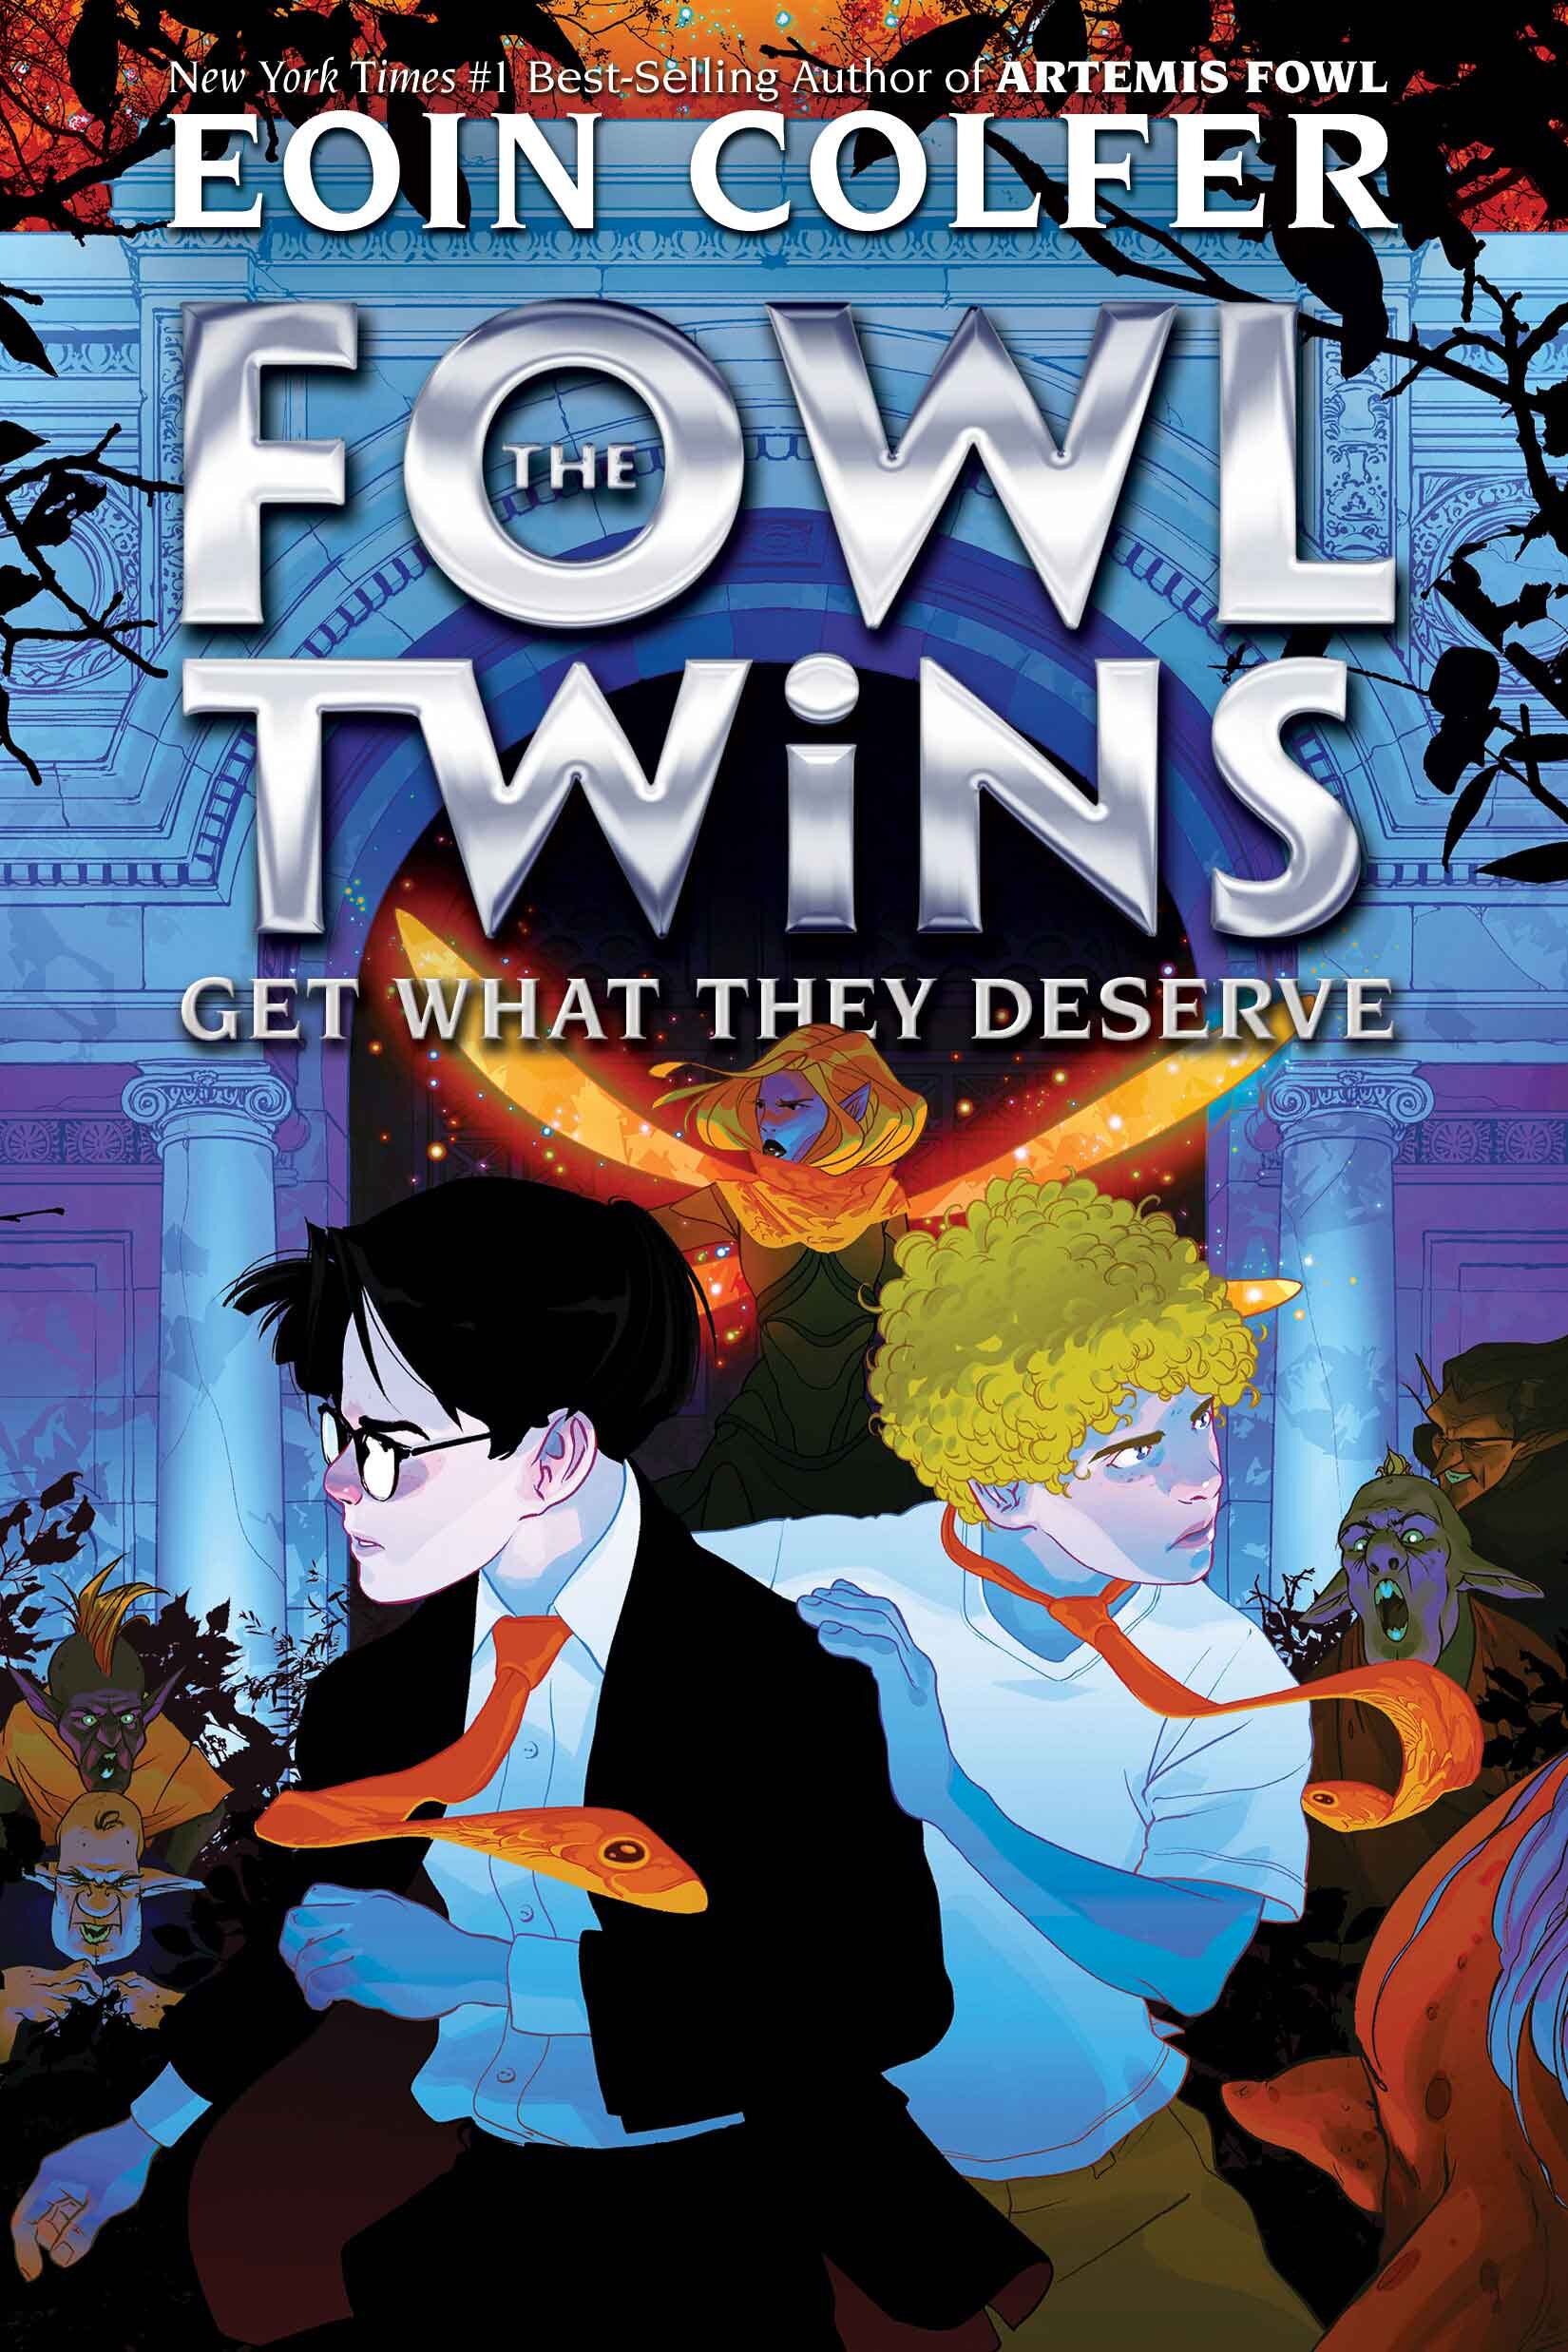 Artemis Fowl' review: Disney movie destroys beloved books